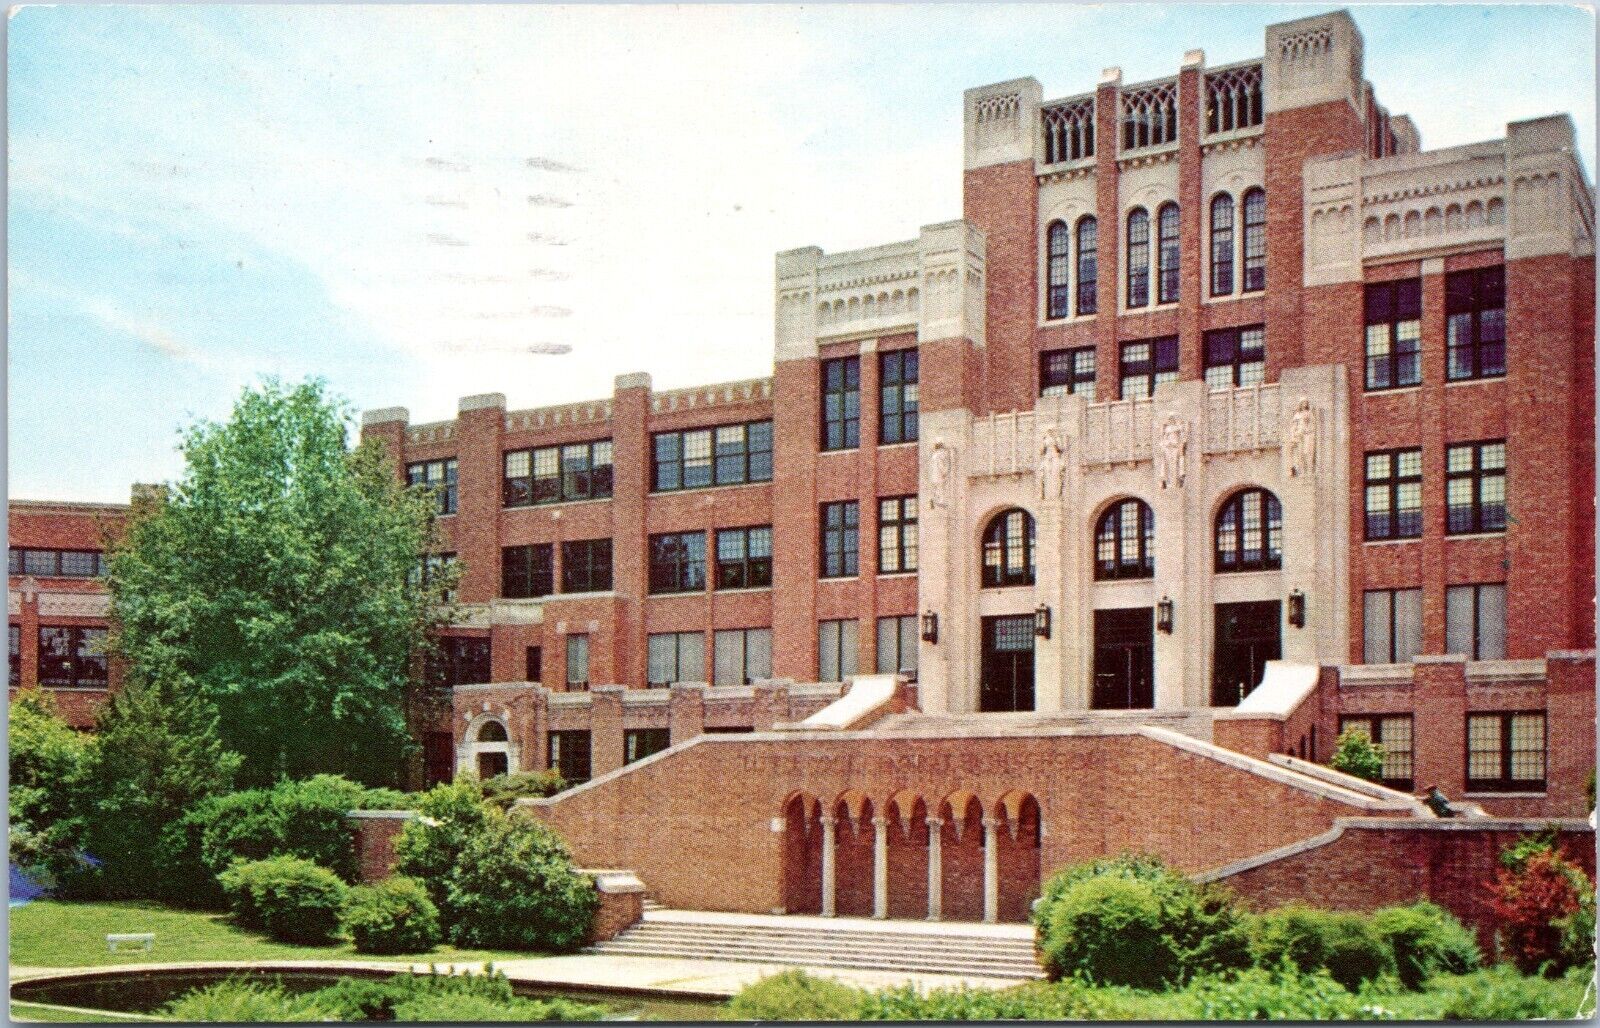 Central High School, Little Rock, Arkansas - 1958 Chrome Postcard - Curt Teich